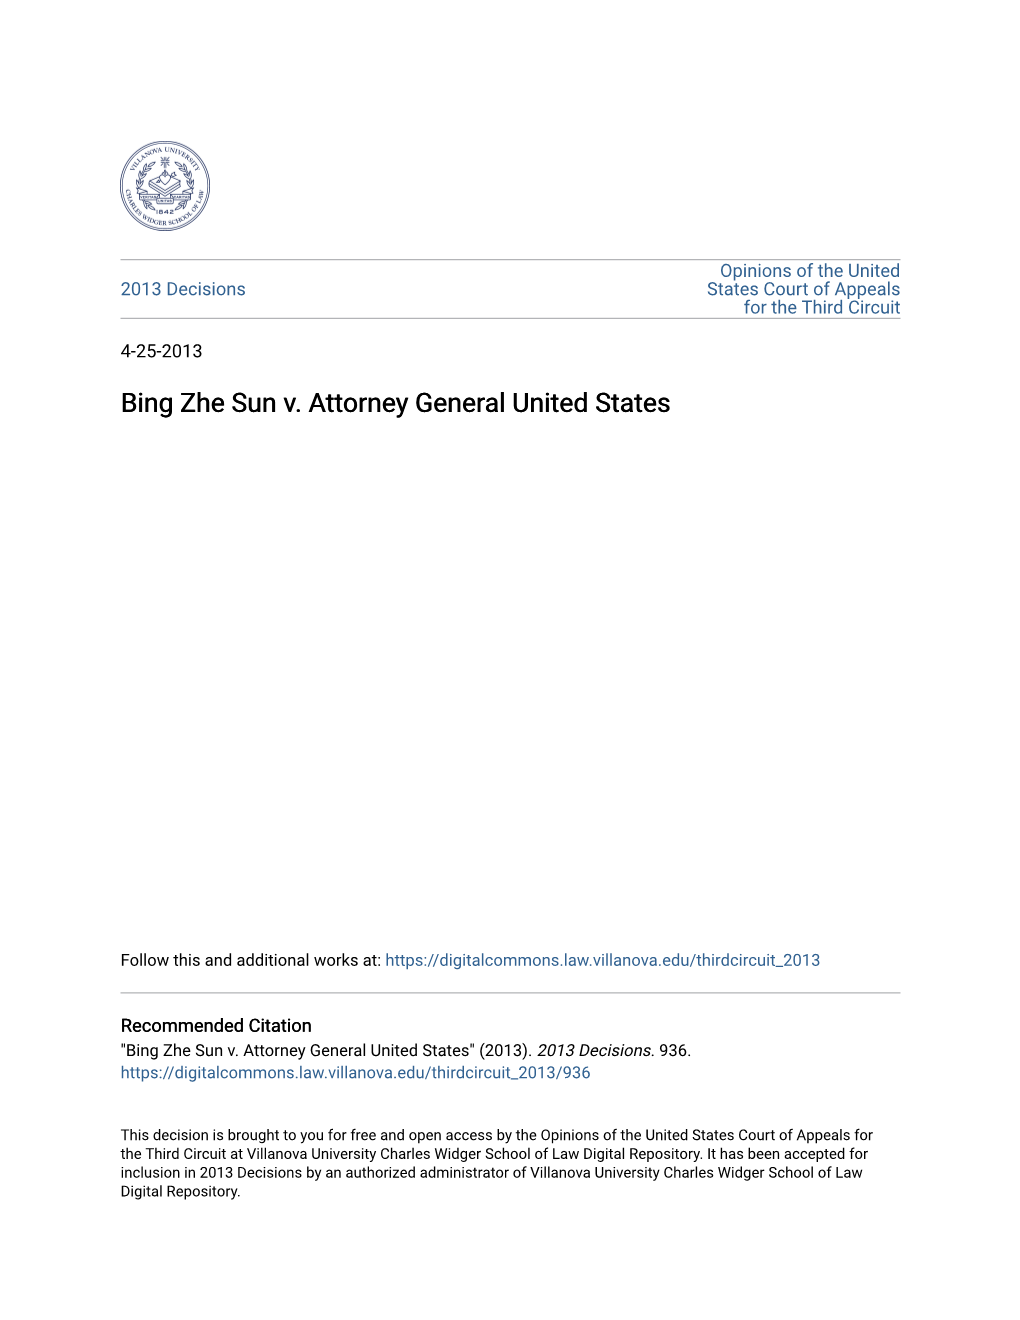 Bing Zhe Sun V. Attorney General United States